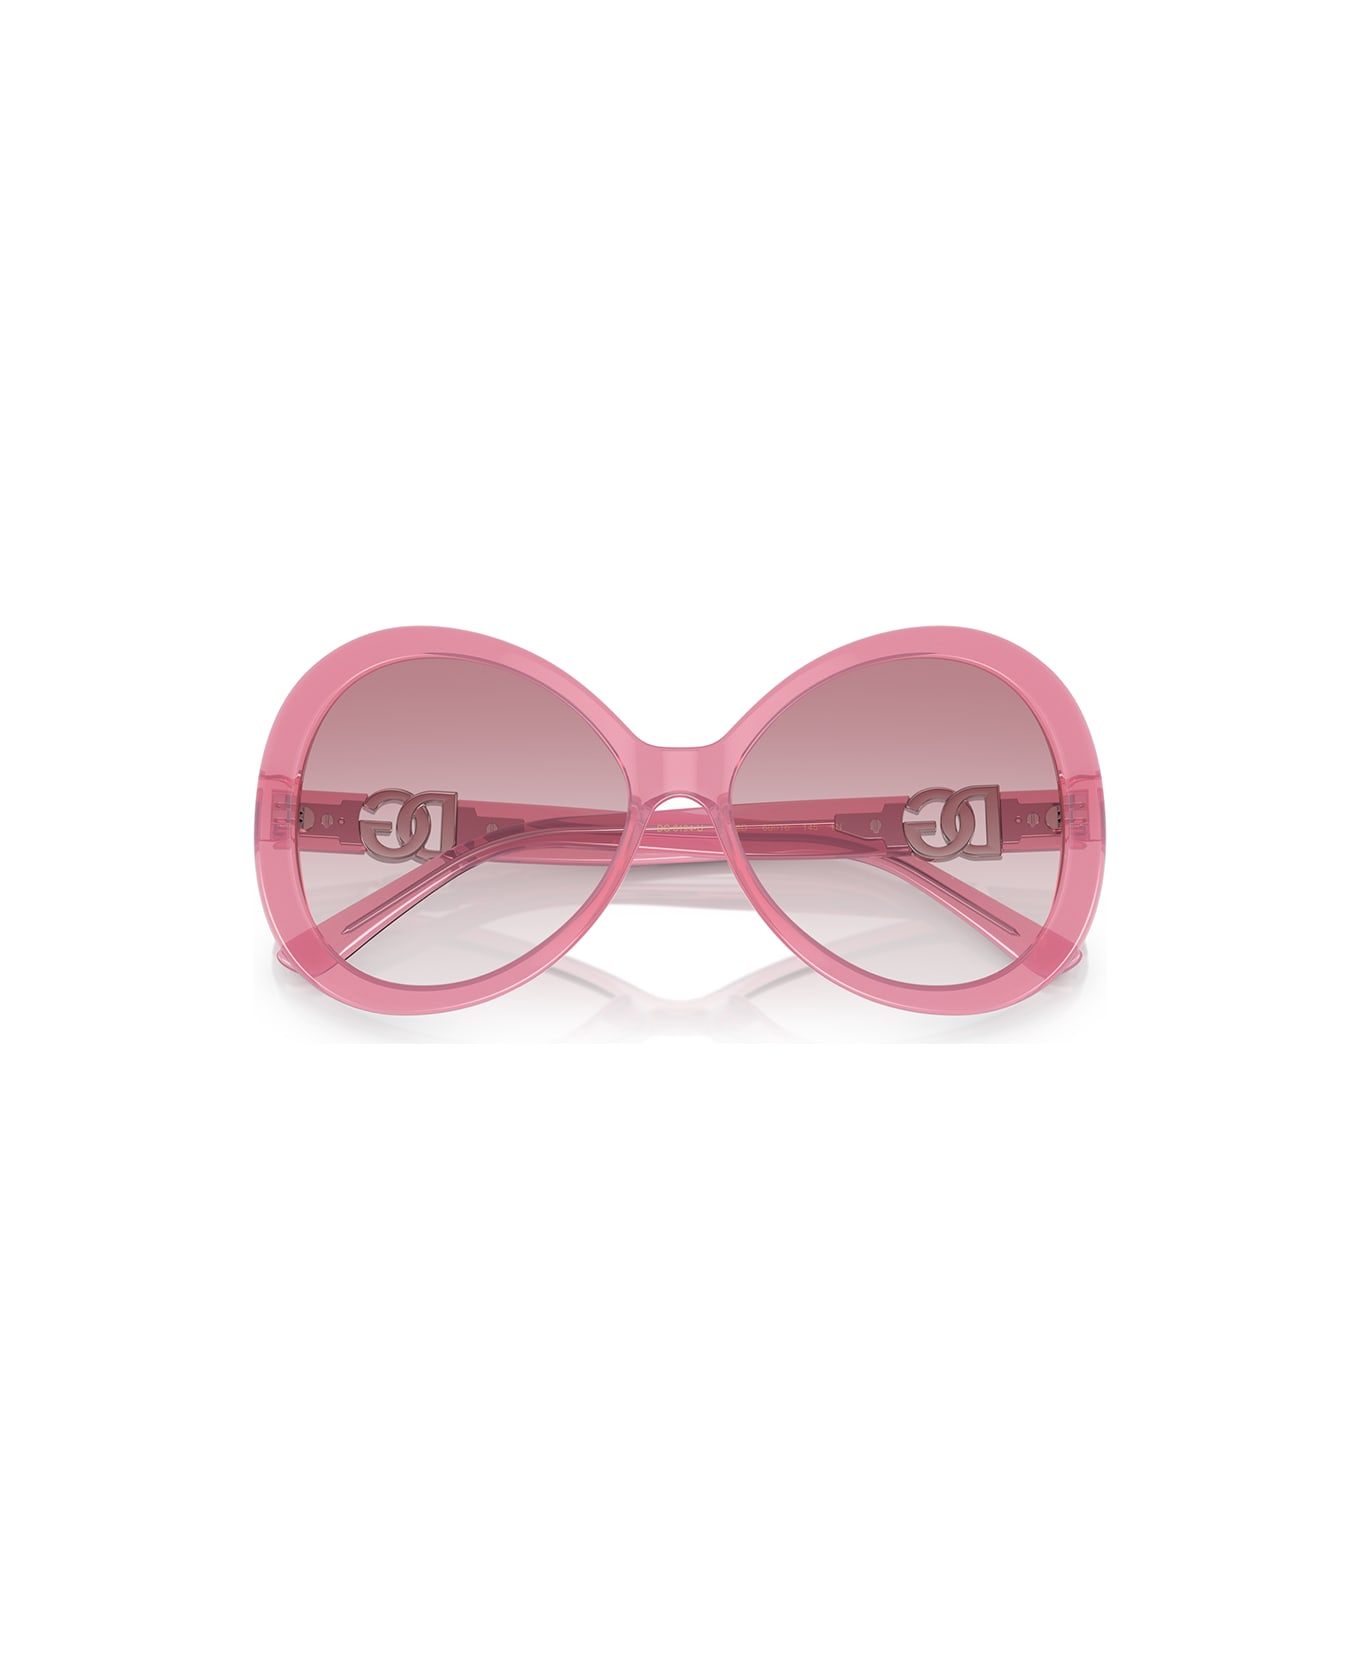 Dolce & Gabbana Eyewear Sunglasses - Rosa/Rosa sfumato